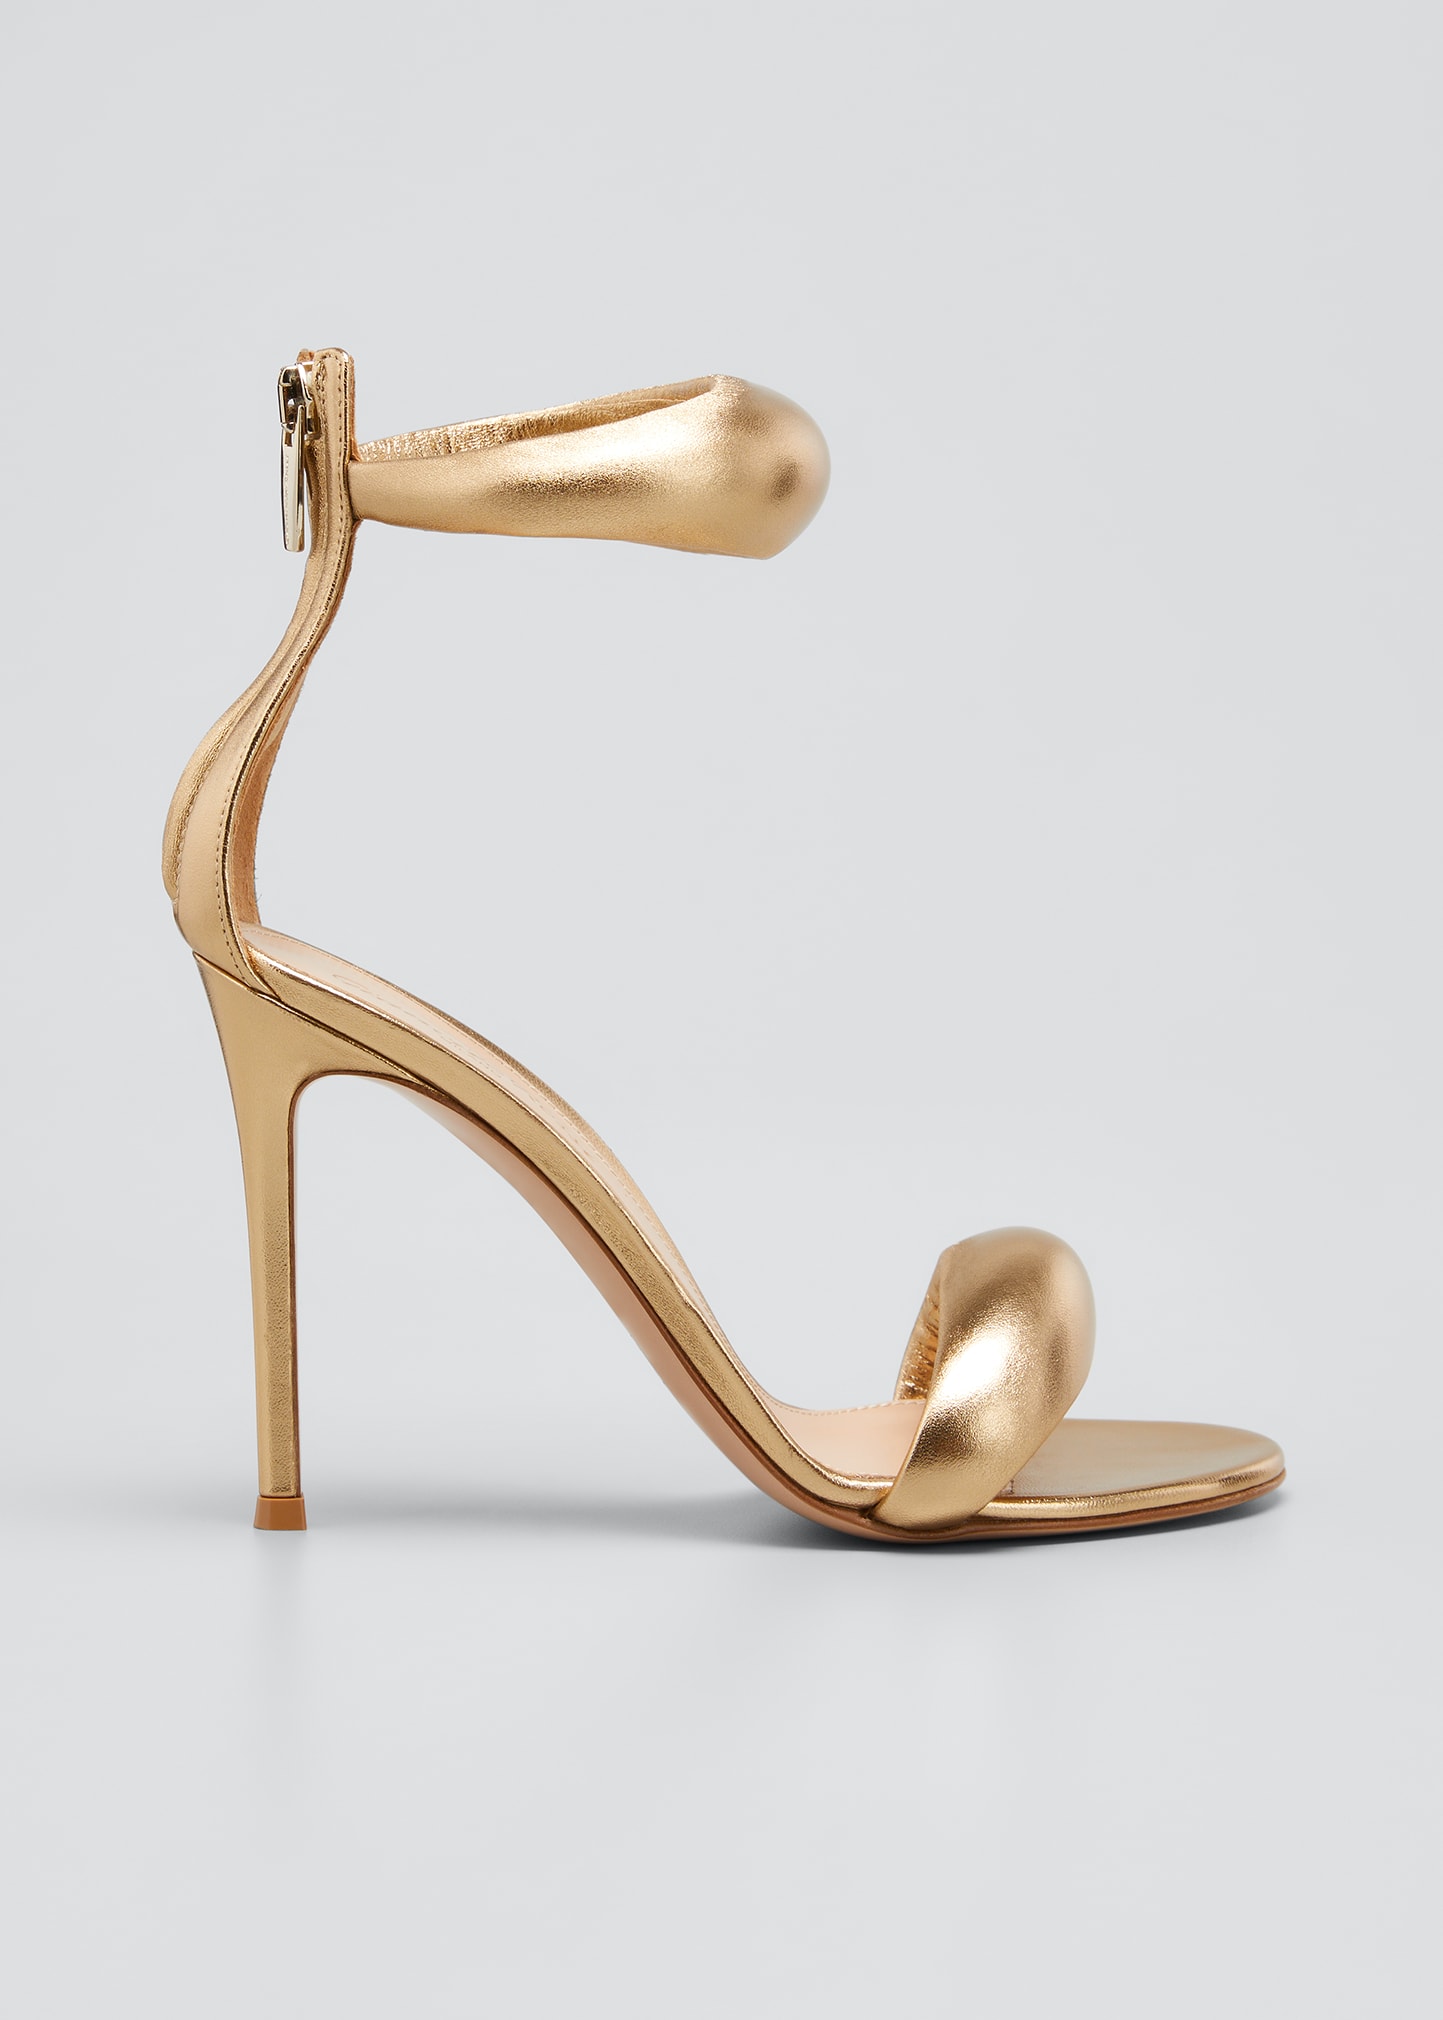 GIANVITO ROSSI Sandals for Women | ModeSens